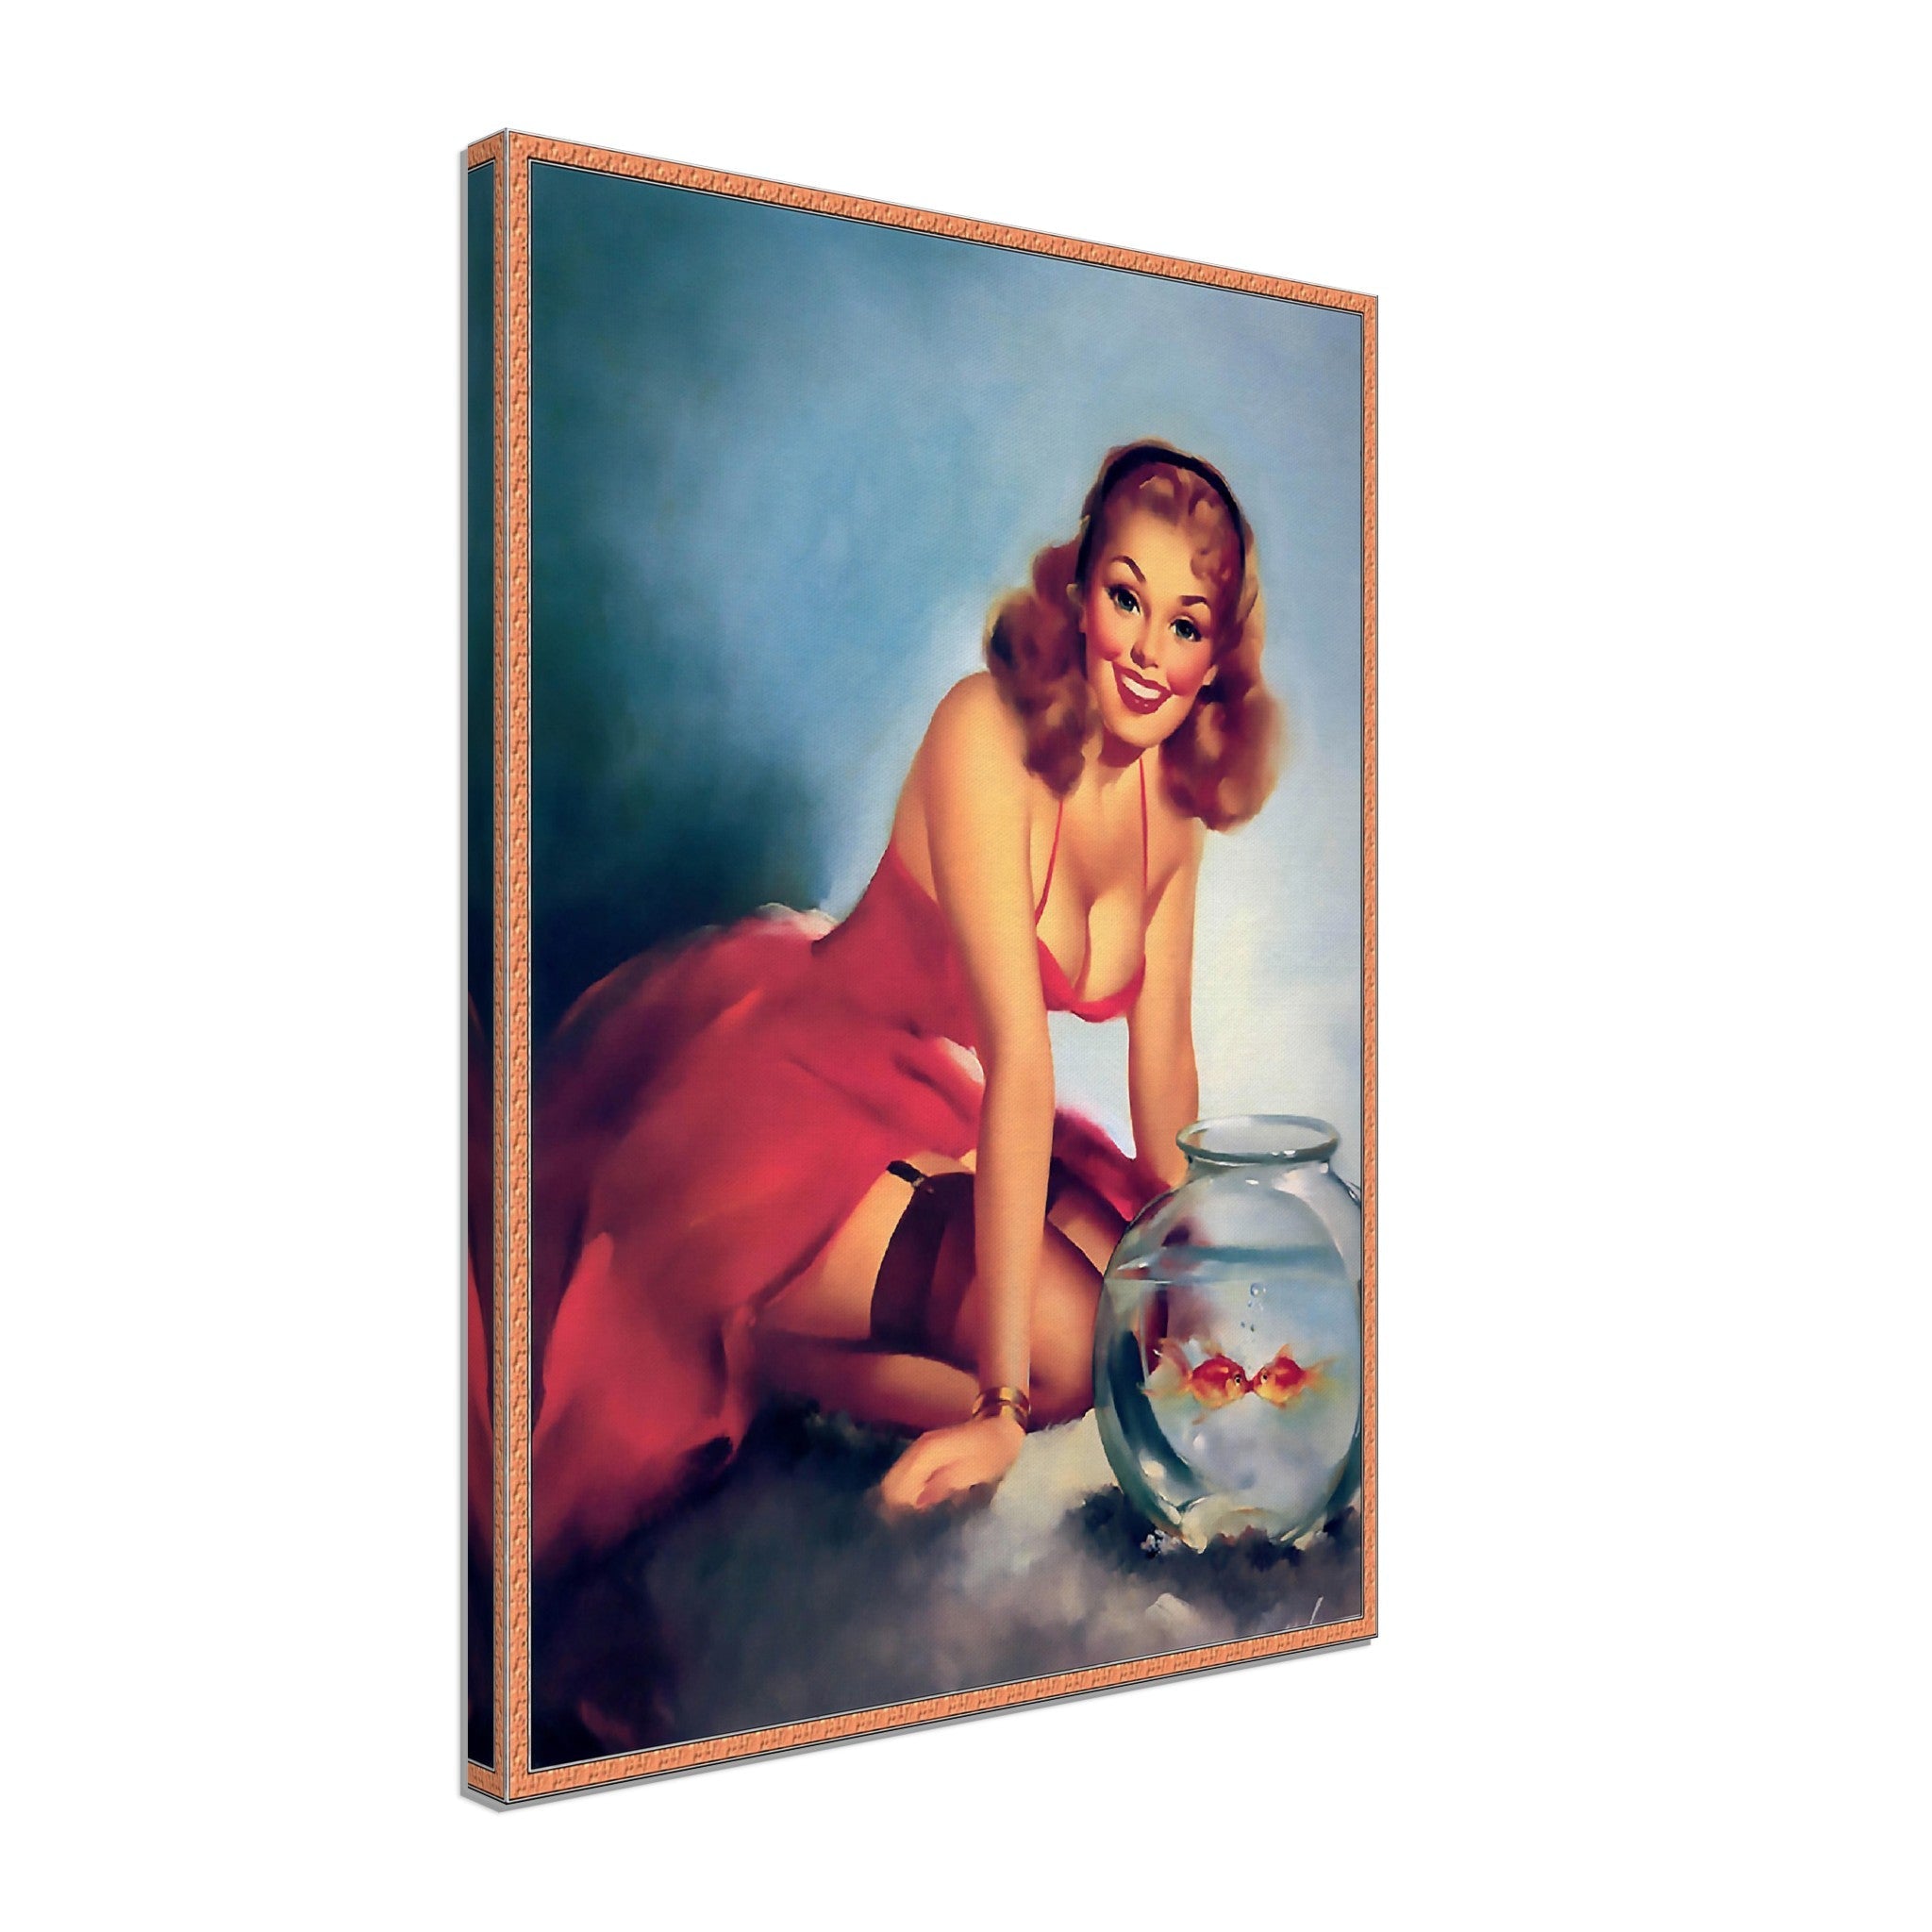 Pin Up Girl Canvas, Red Dress Goldfish, Edward Runci - Vintage Art - Retro Pin Up Girl Canvas Print - Late 1940'S - 1950'S - WallArtPrints4U